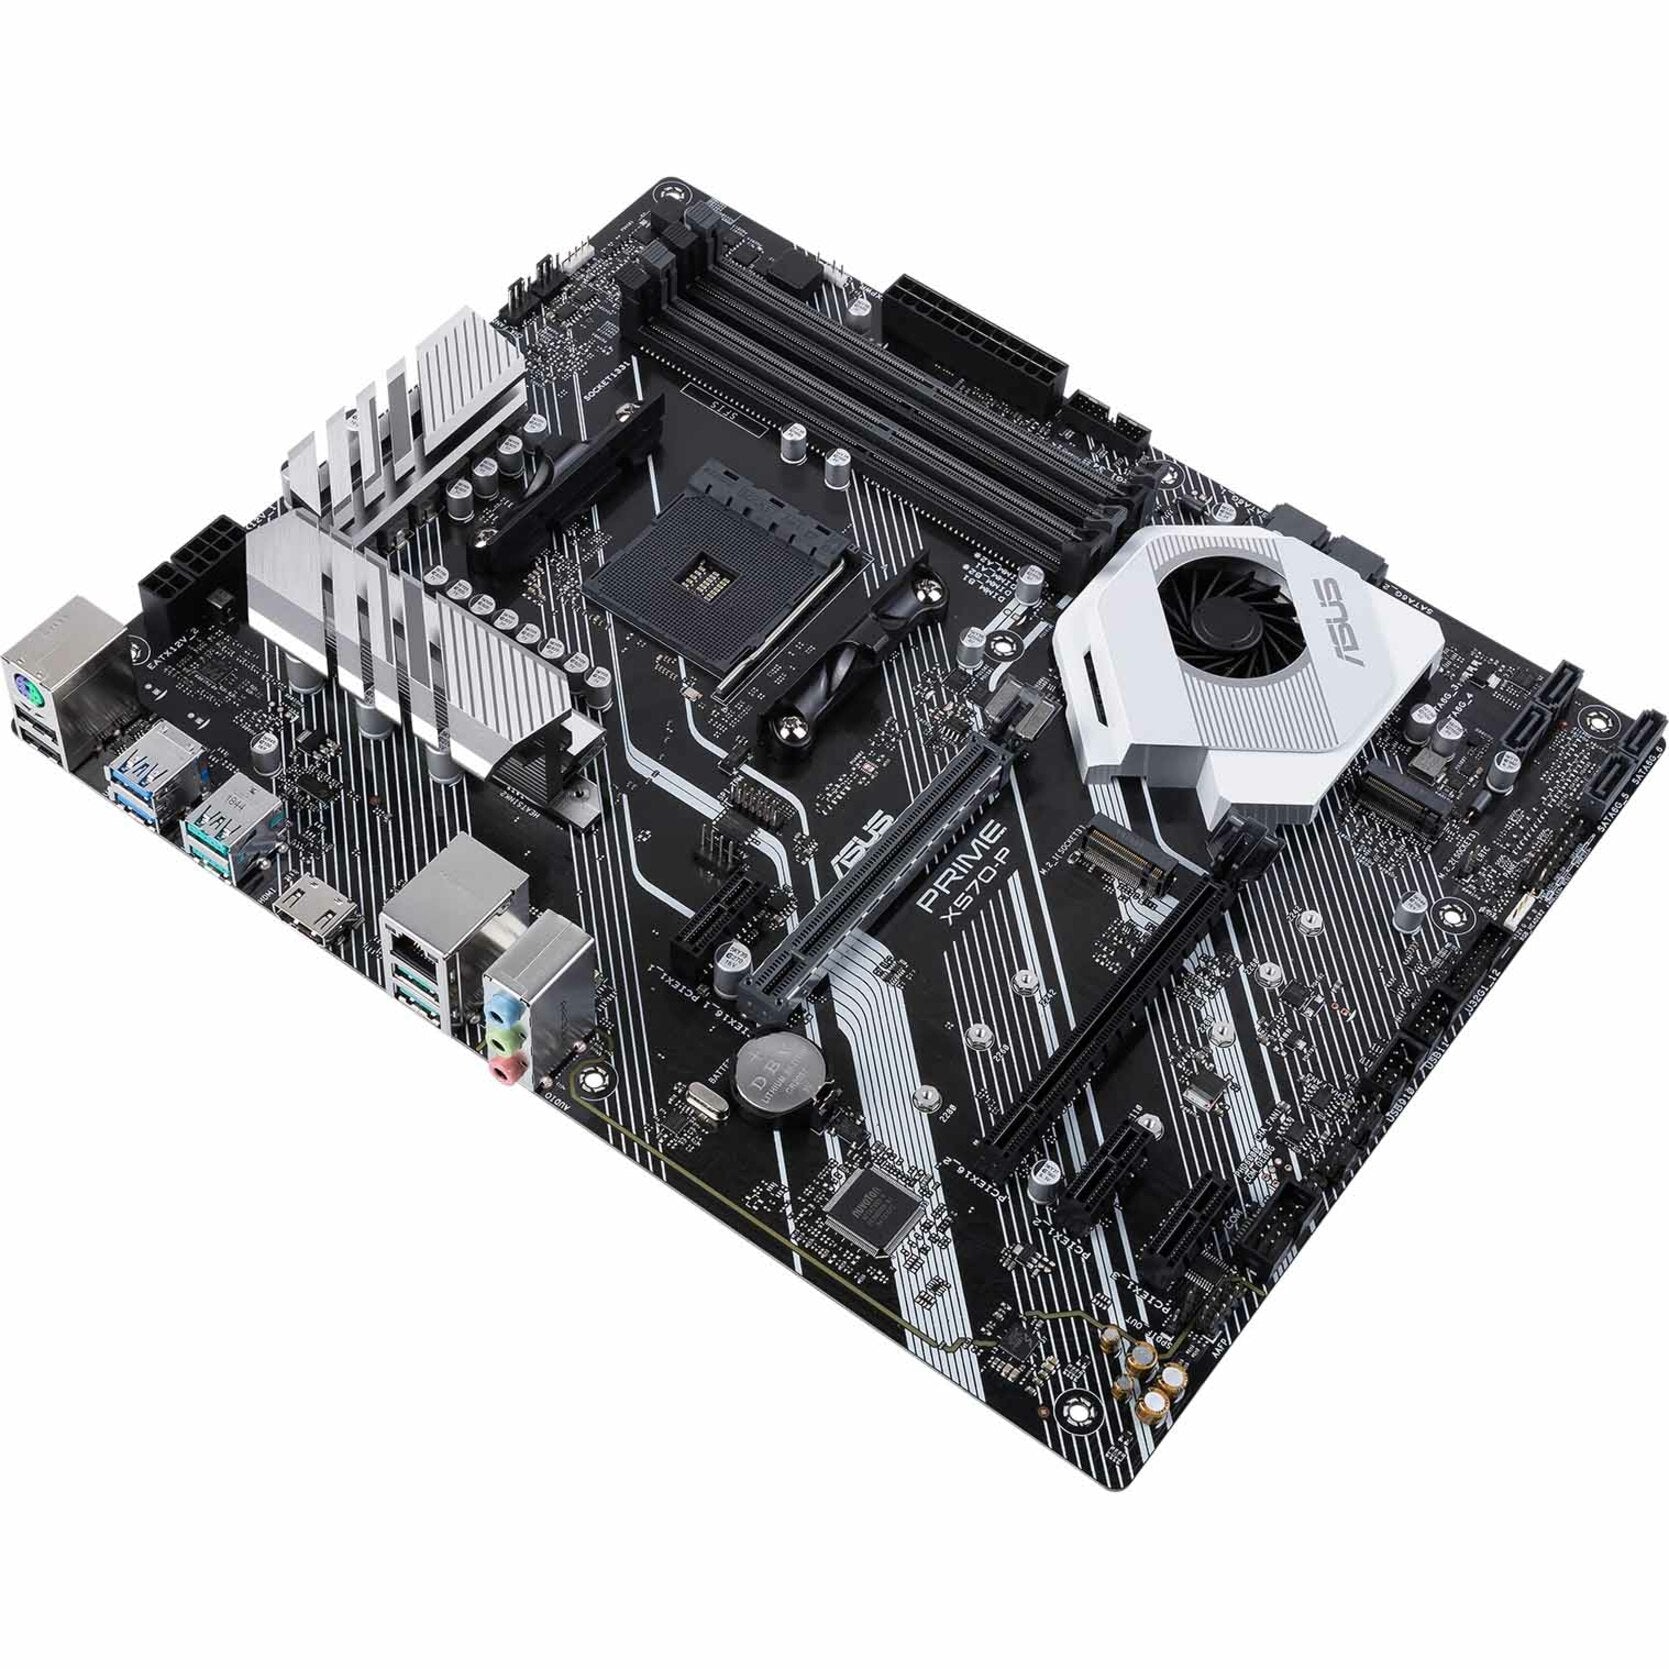 Asus PRIME X570-P Desktop Motherboard, AMD Ryzen 3 AM4 Processors w Dual M.2 USB 3.2 Gen 2 & AuraSync